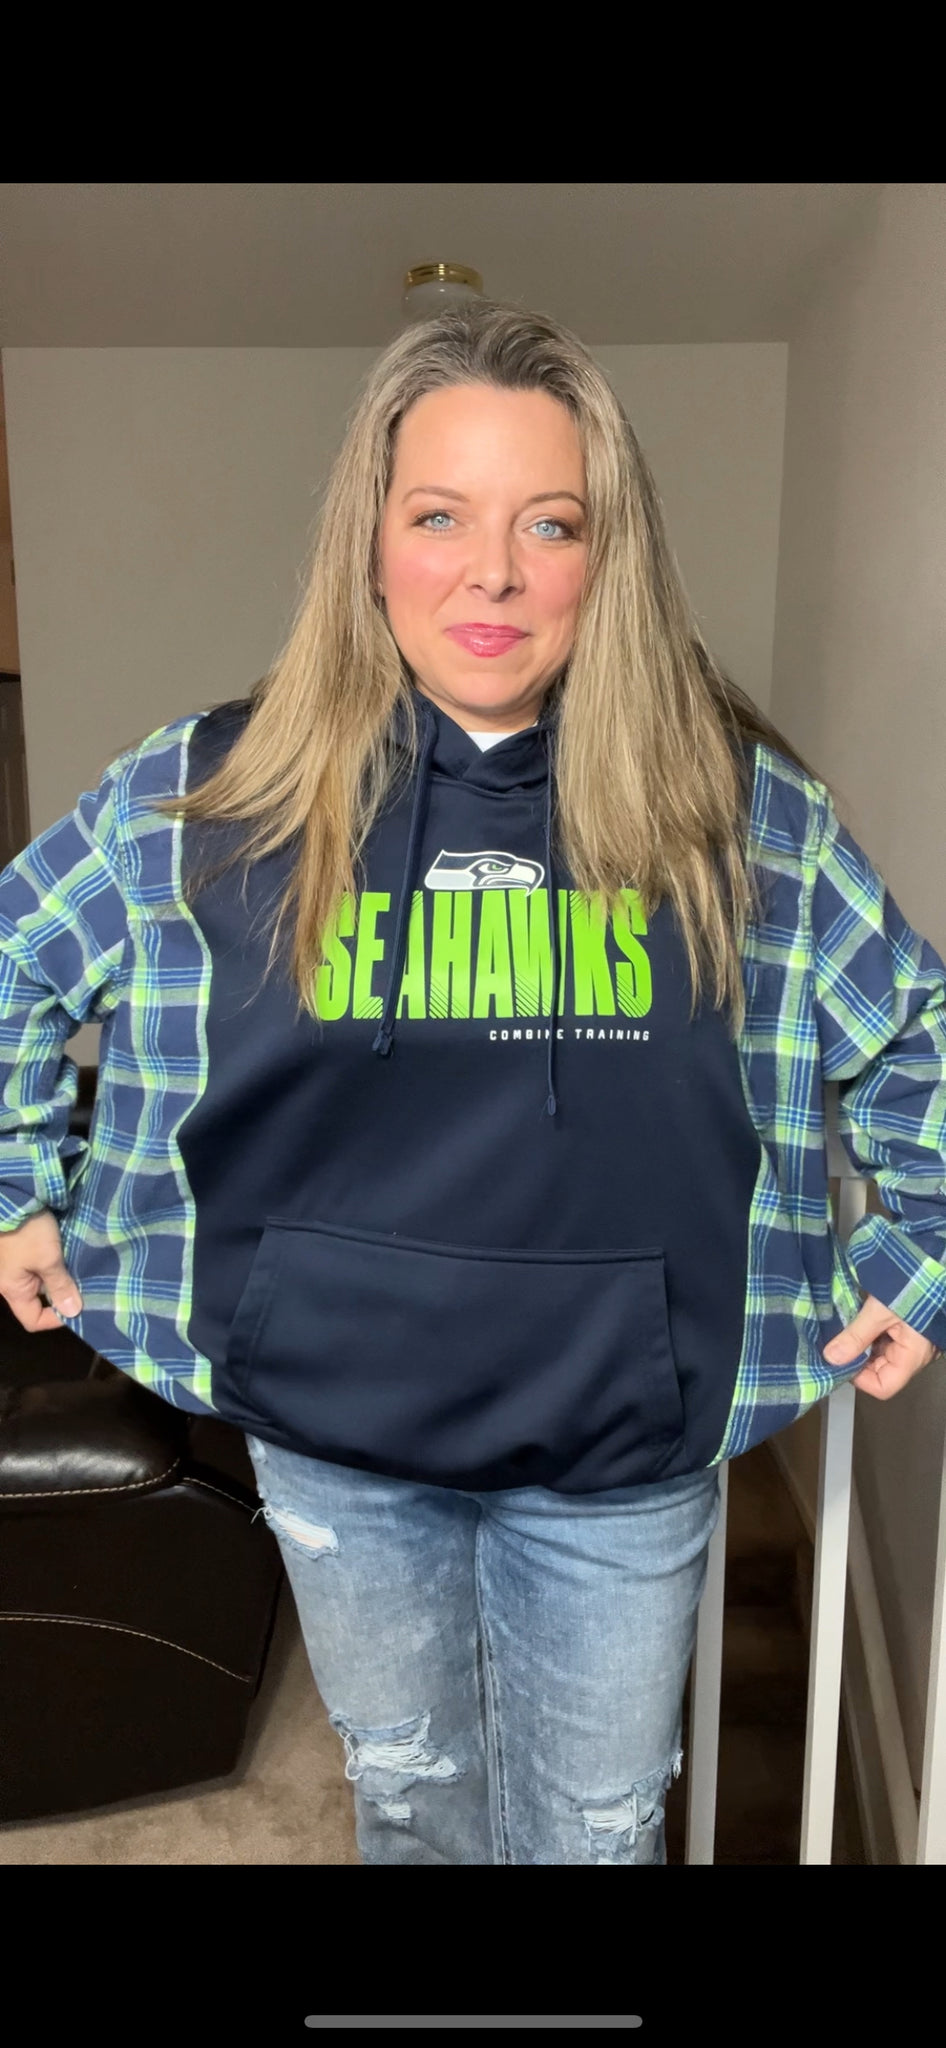 Seahawks - woman’s XL/1X